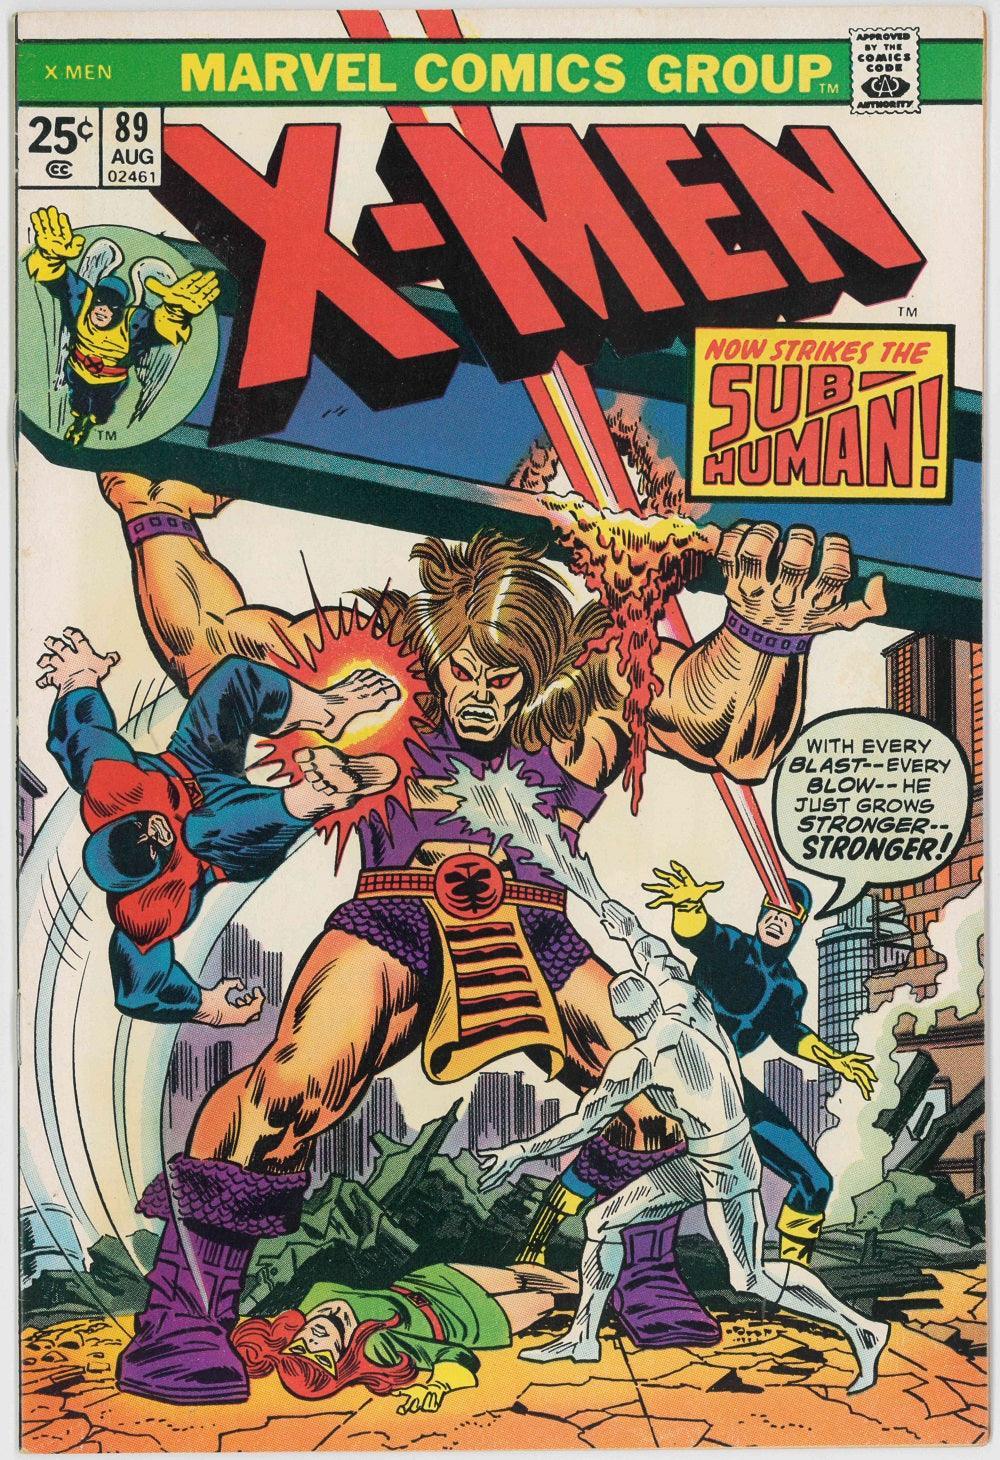 UNCANNY X-MEN (1963) #89 (VF/NM) - Kings Comics